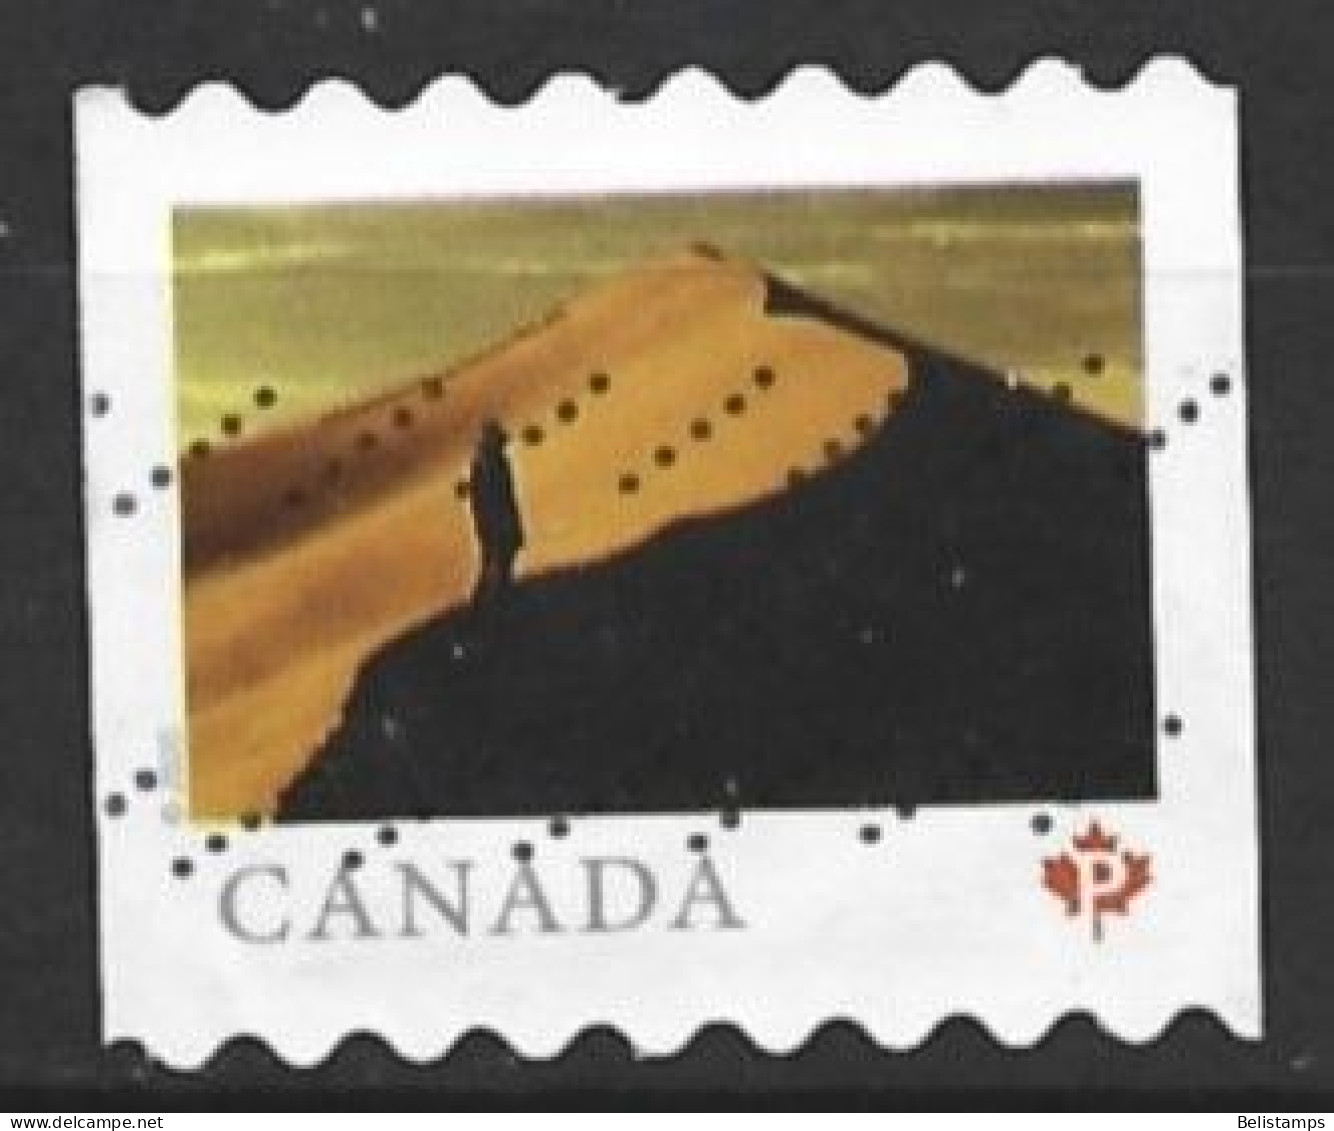 Canada 2020. Scott #3213 (U) Athabasca Sand Dunes, Provincial Park, Saskatchewan - Usati